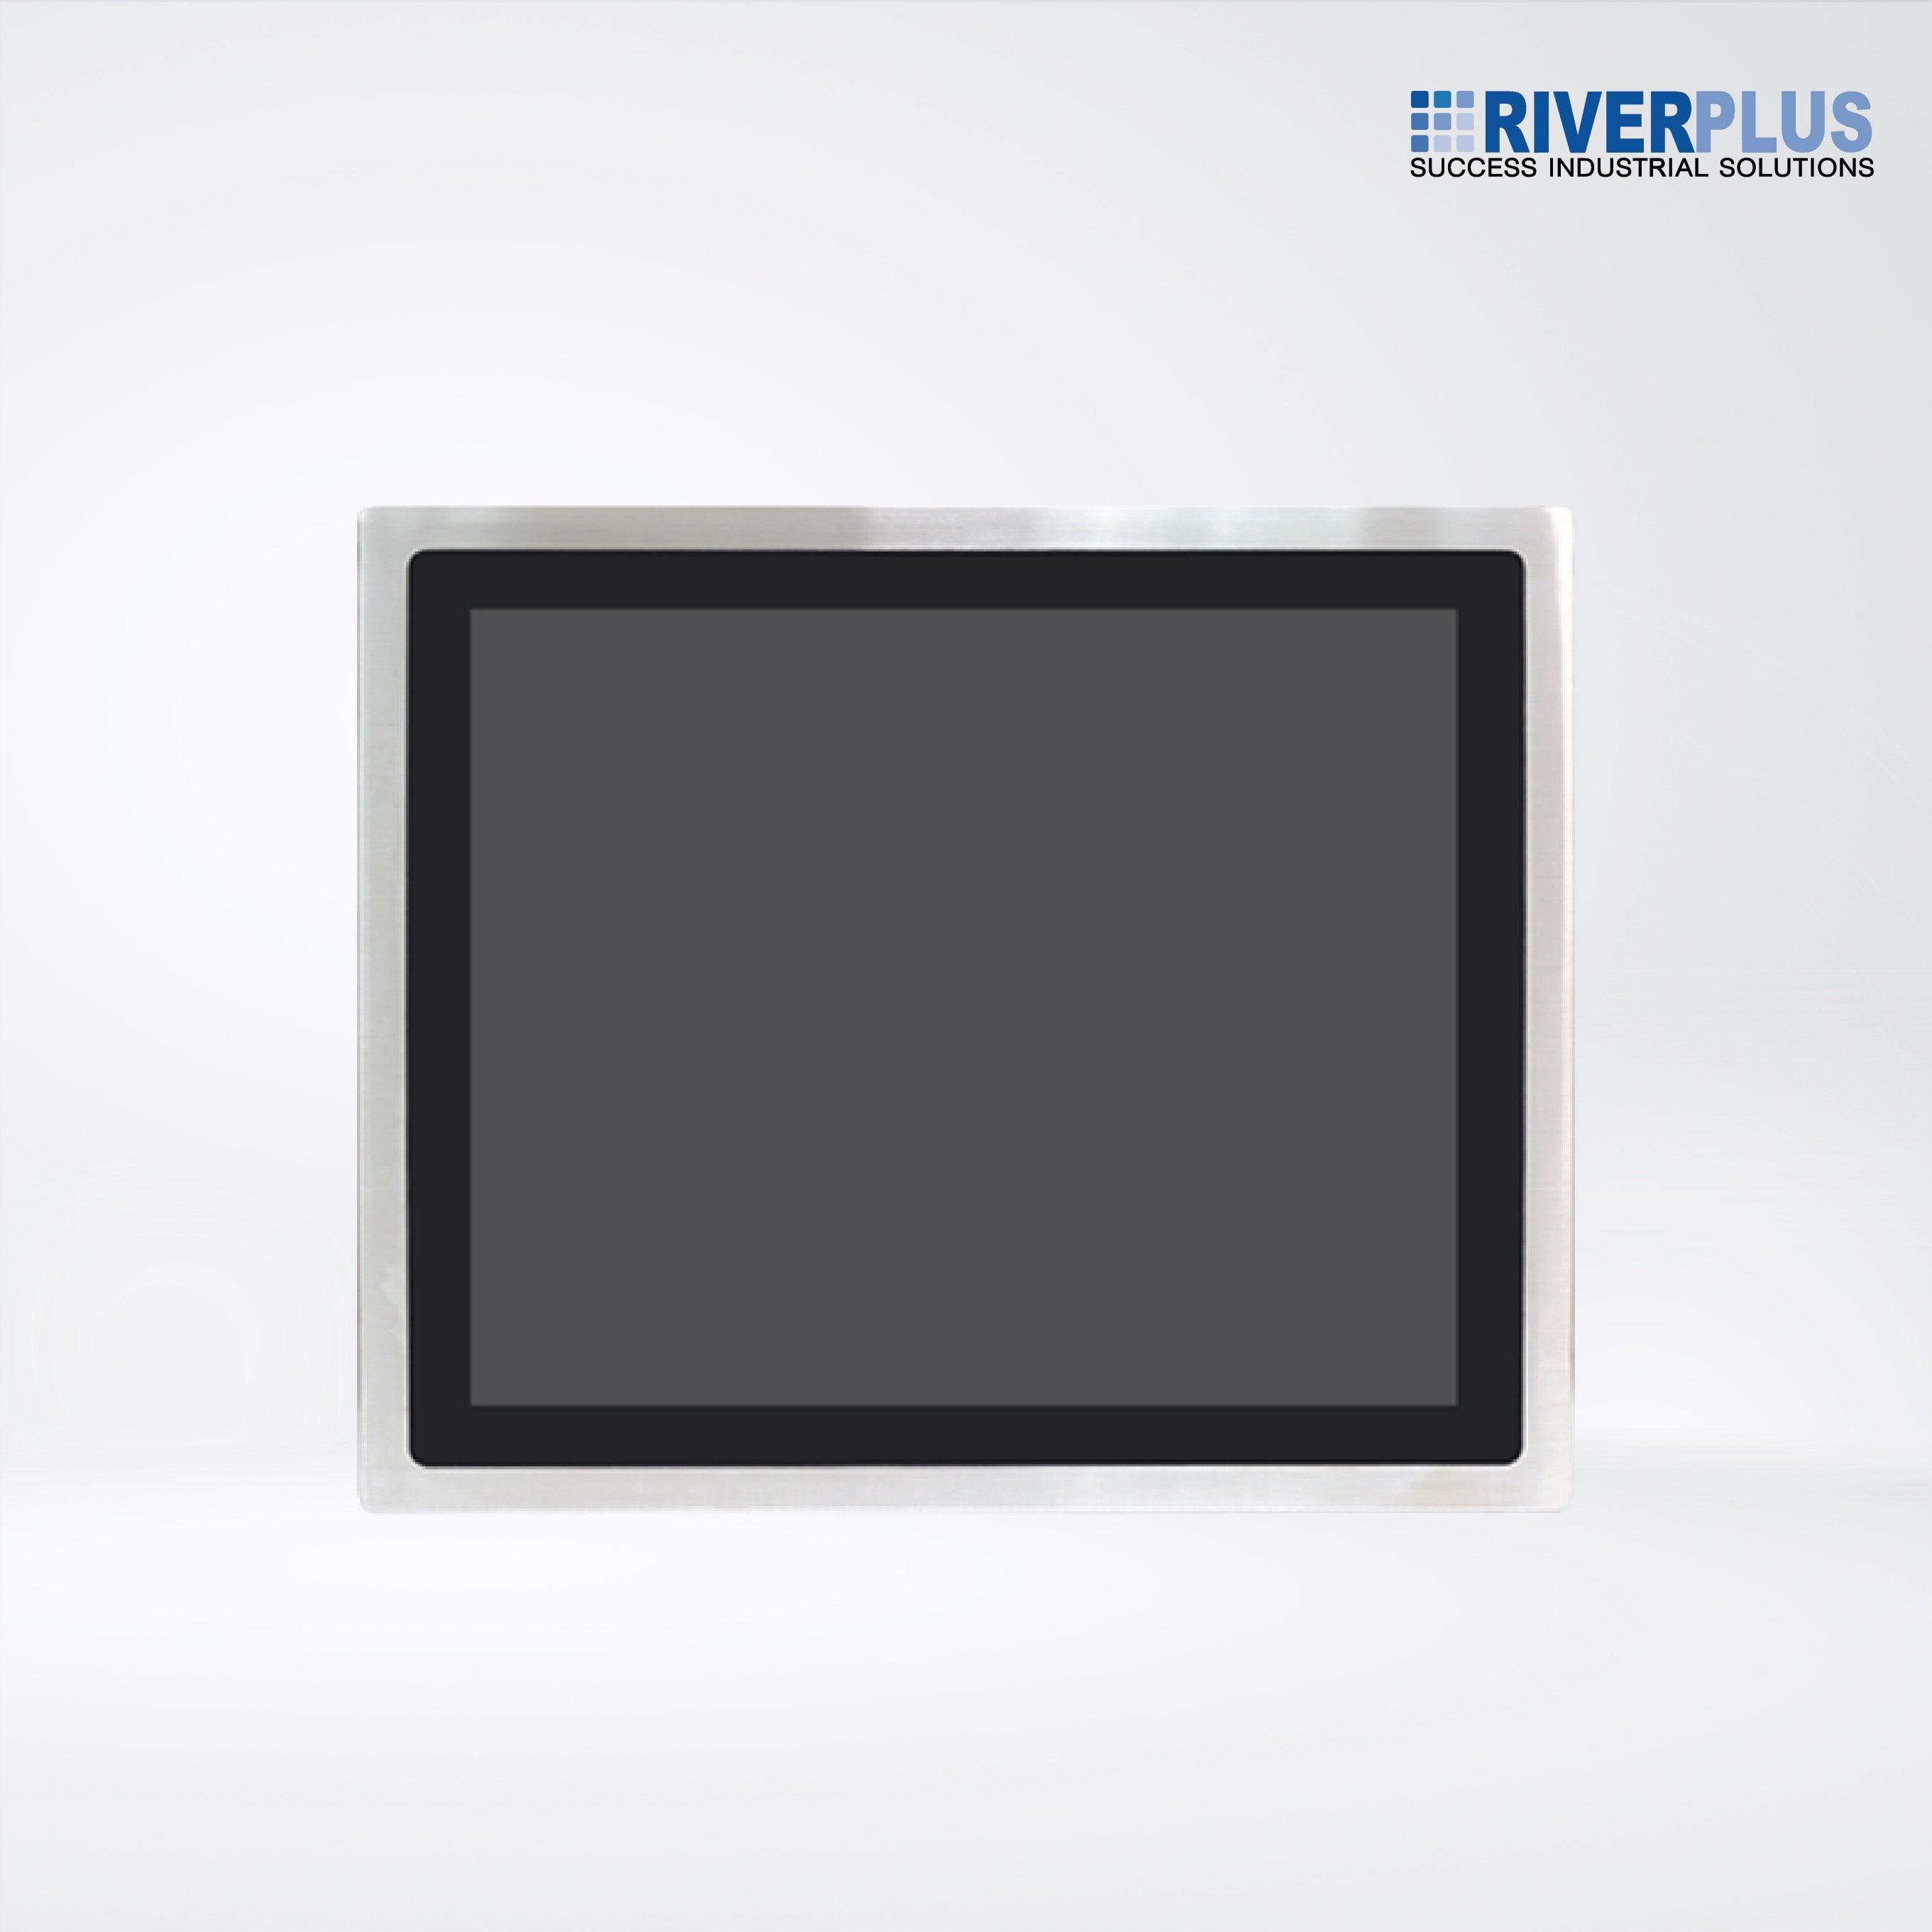 AEx-119P 19” ATEX Certified Stainless Steel Display, Luminance : 350 (cd/m²) - Riverplus